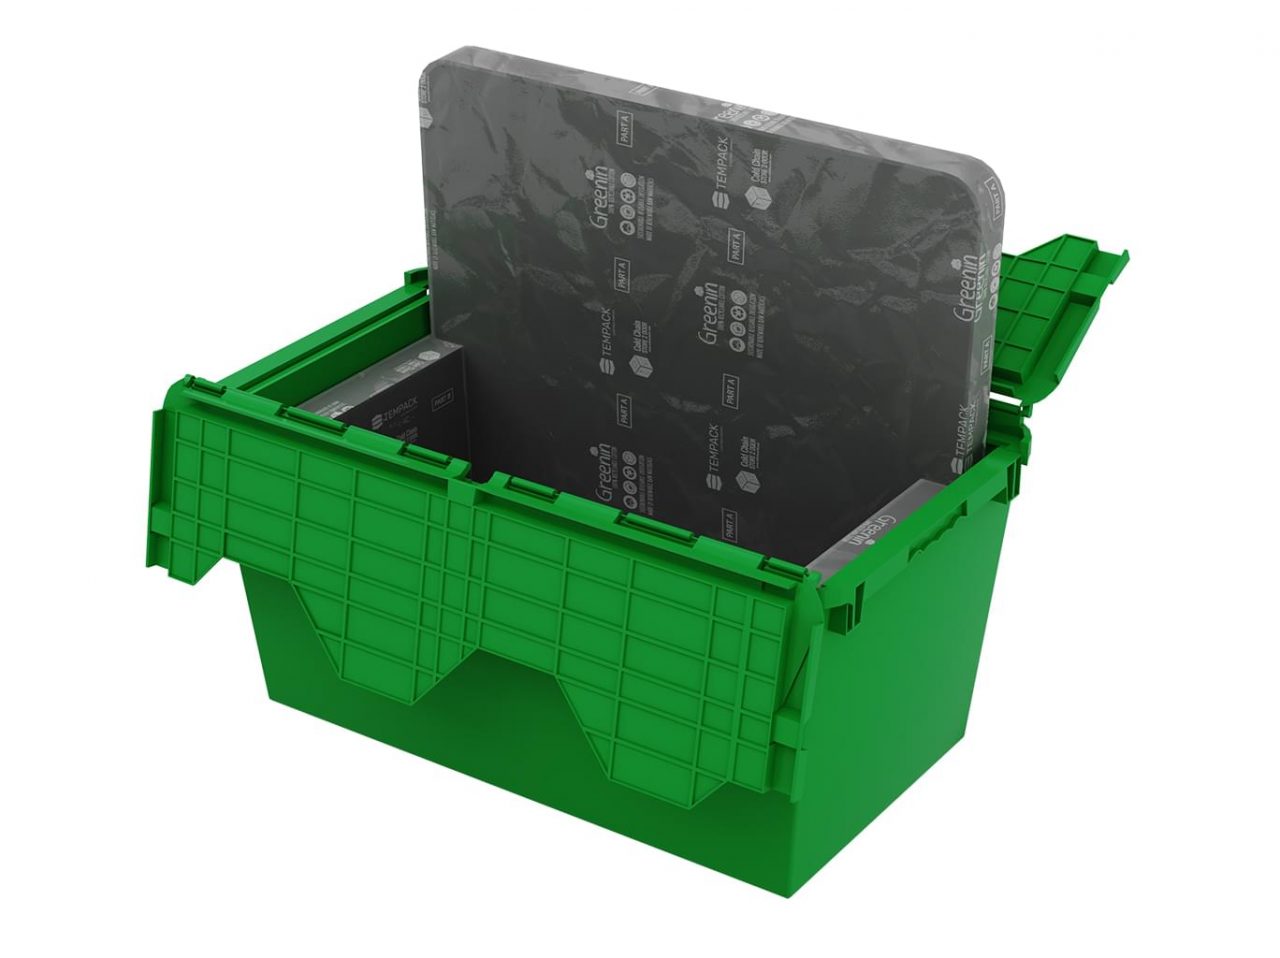 tempack-greenin-ru-sustainable-insulated-packaging-3@2x-1280x958